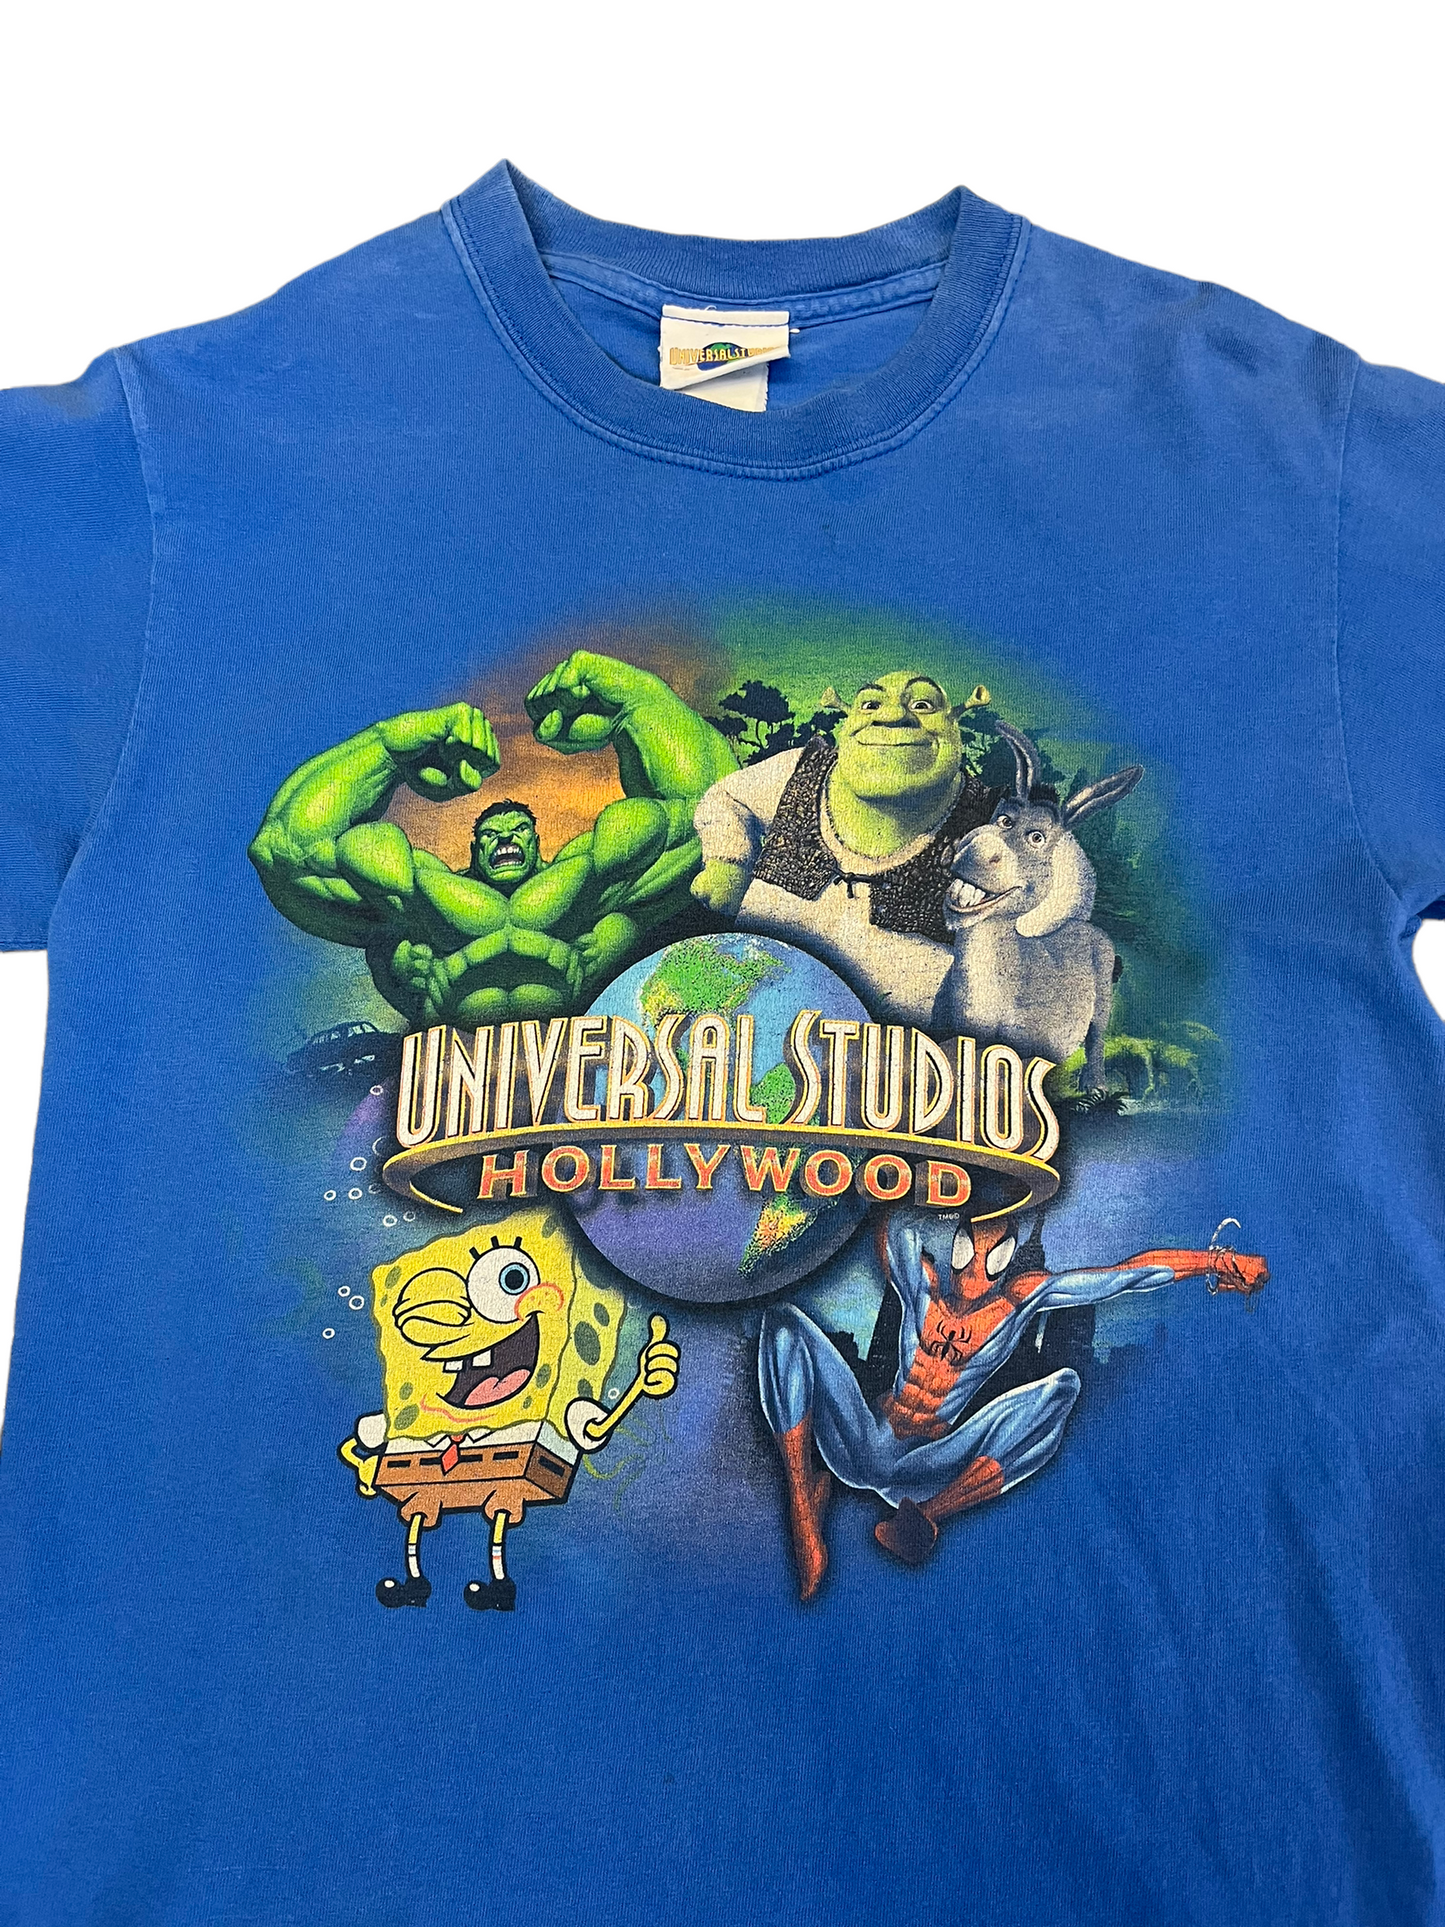 (S) Vintage Universal Studios Hollywood Tee